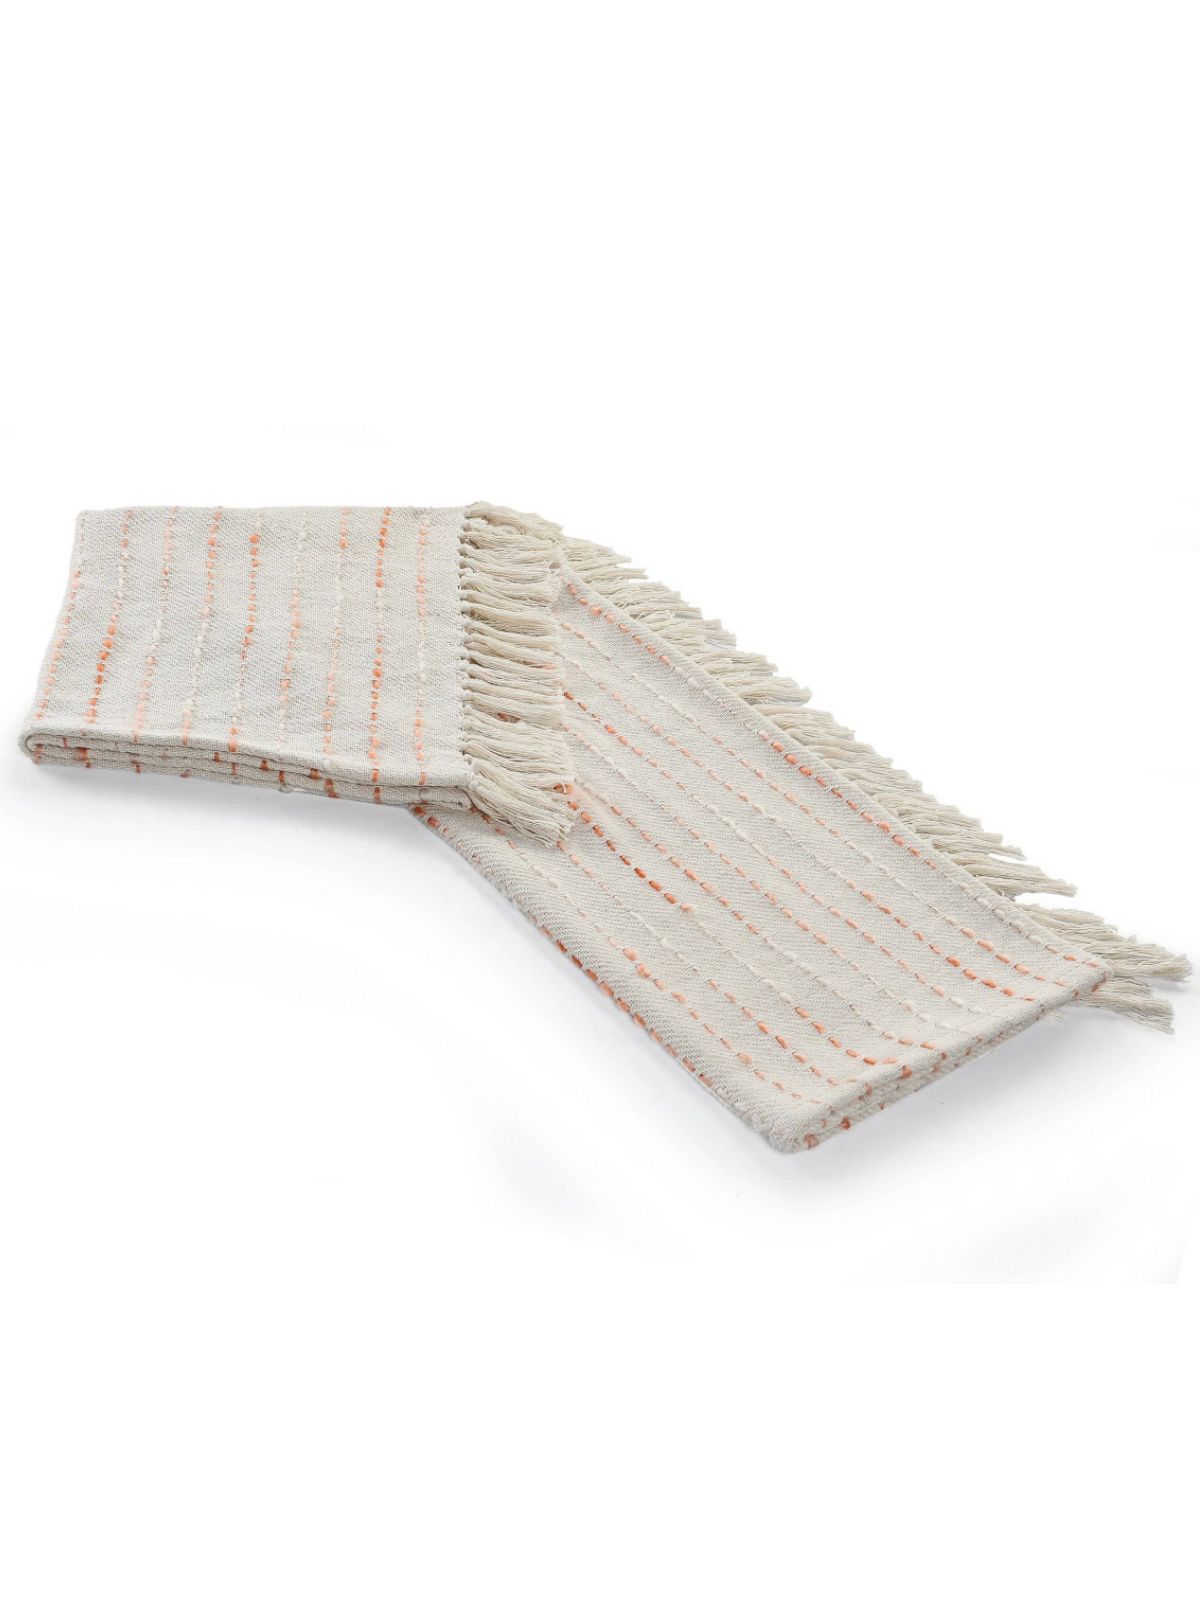 Peach Stripe Woven Cotton Throw Blanket with Fringe, 50W x 60L.